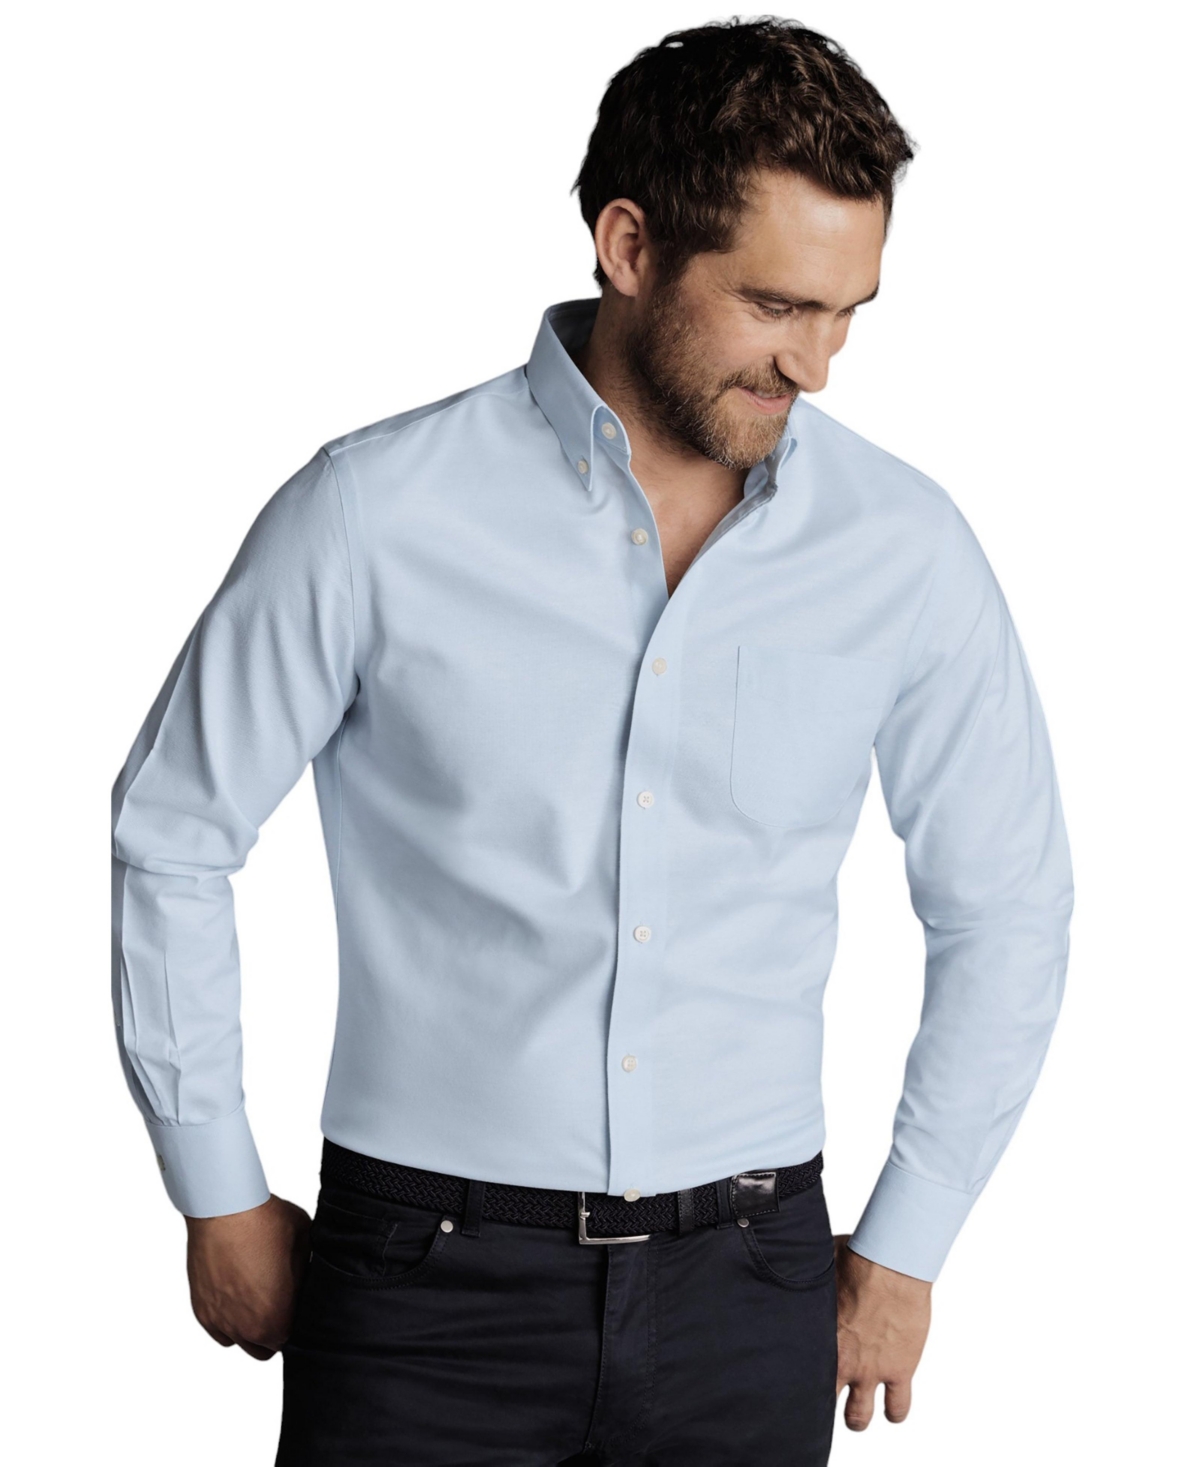 Men's Slim Fit Button-Down Collar Non-Iron Stretch Oxford Shirt - White